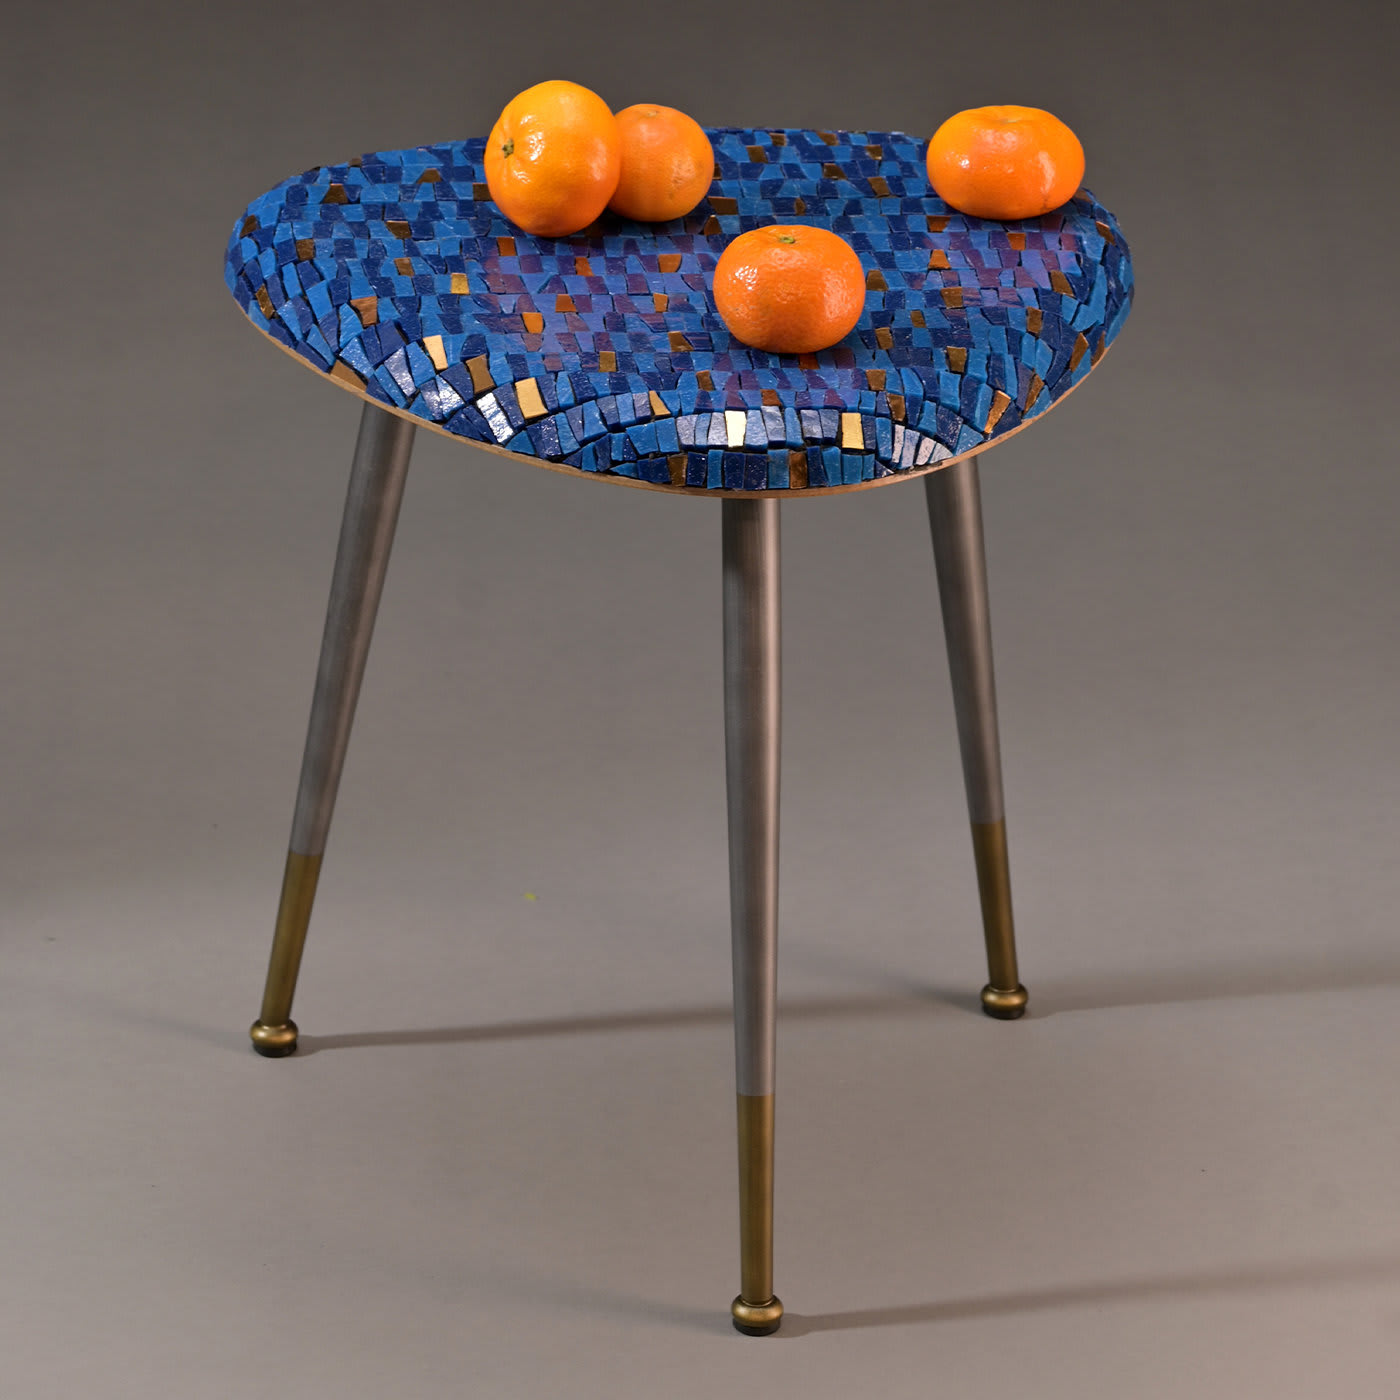 Casarialto Atelier Acqua coffee table by Michela Nardin - Casarialto